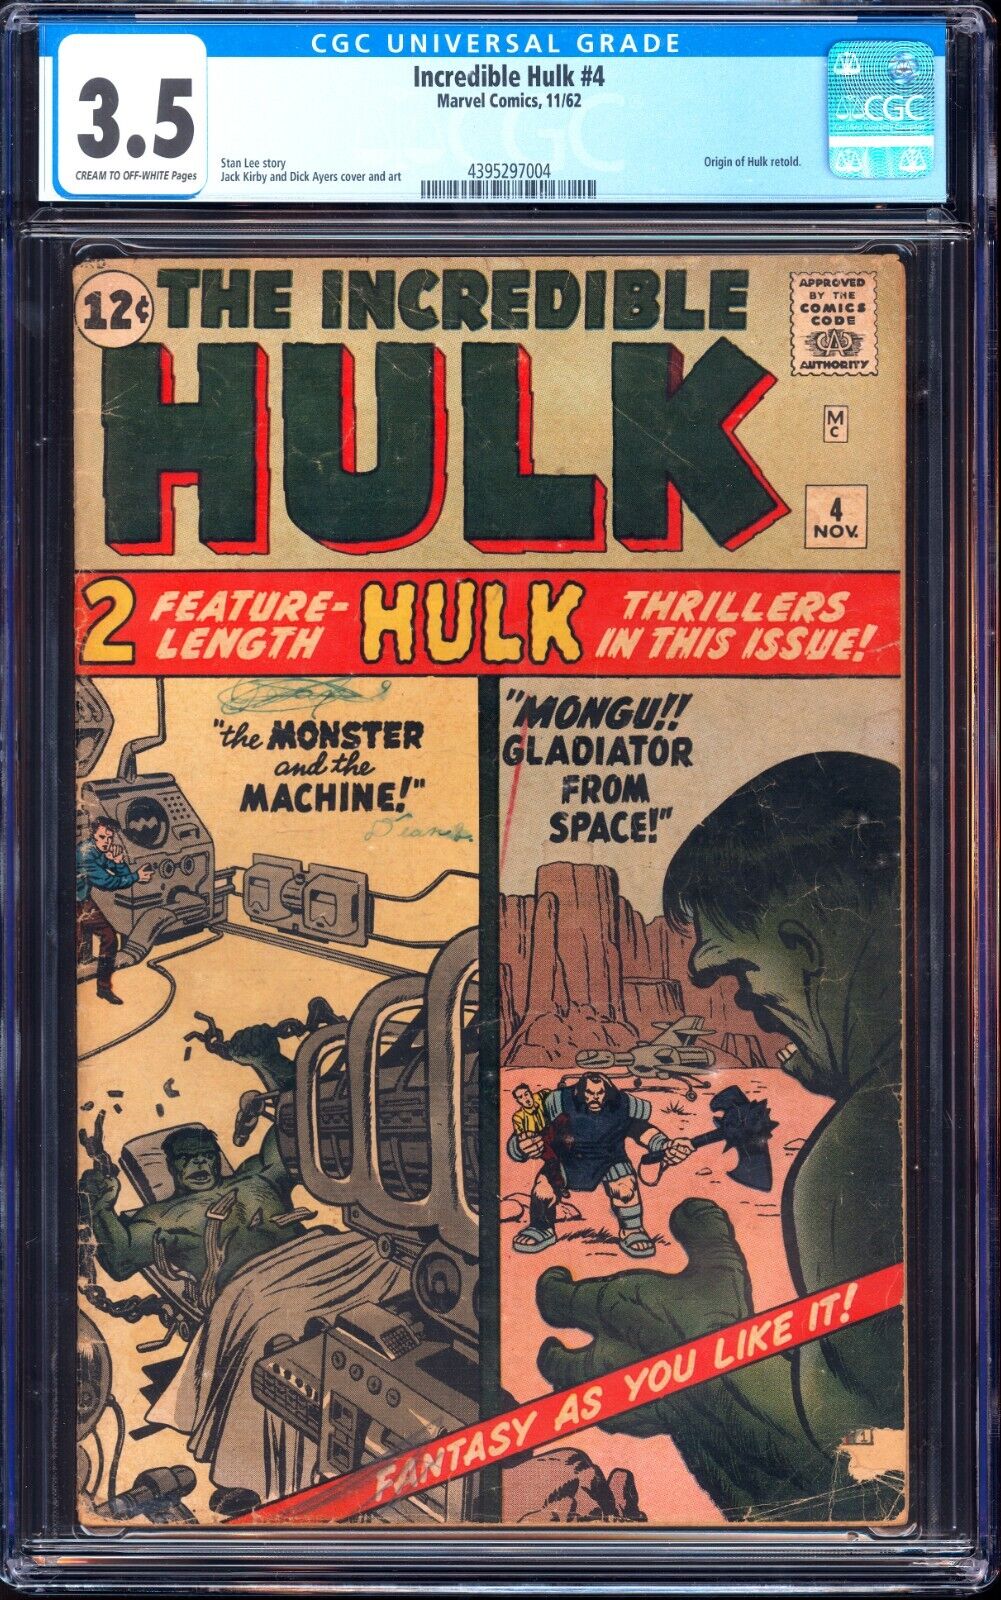 Marvel Incredible Hulk #4 CGC 3.5 Cream to OW Pages 1962 - Origin of Hulk Retold